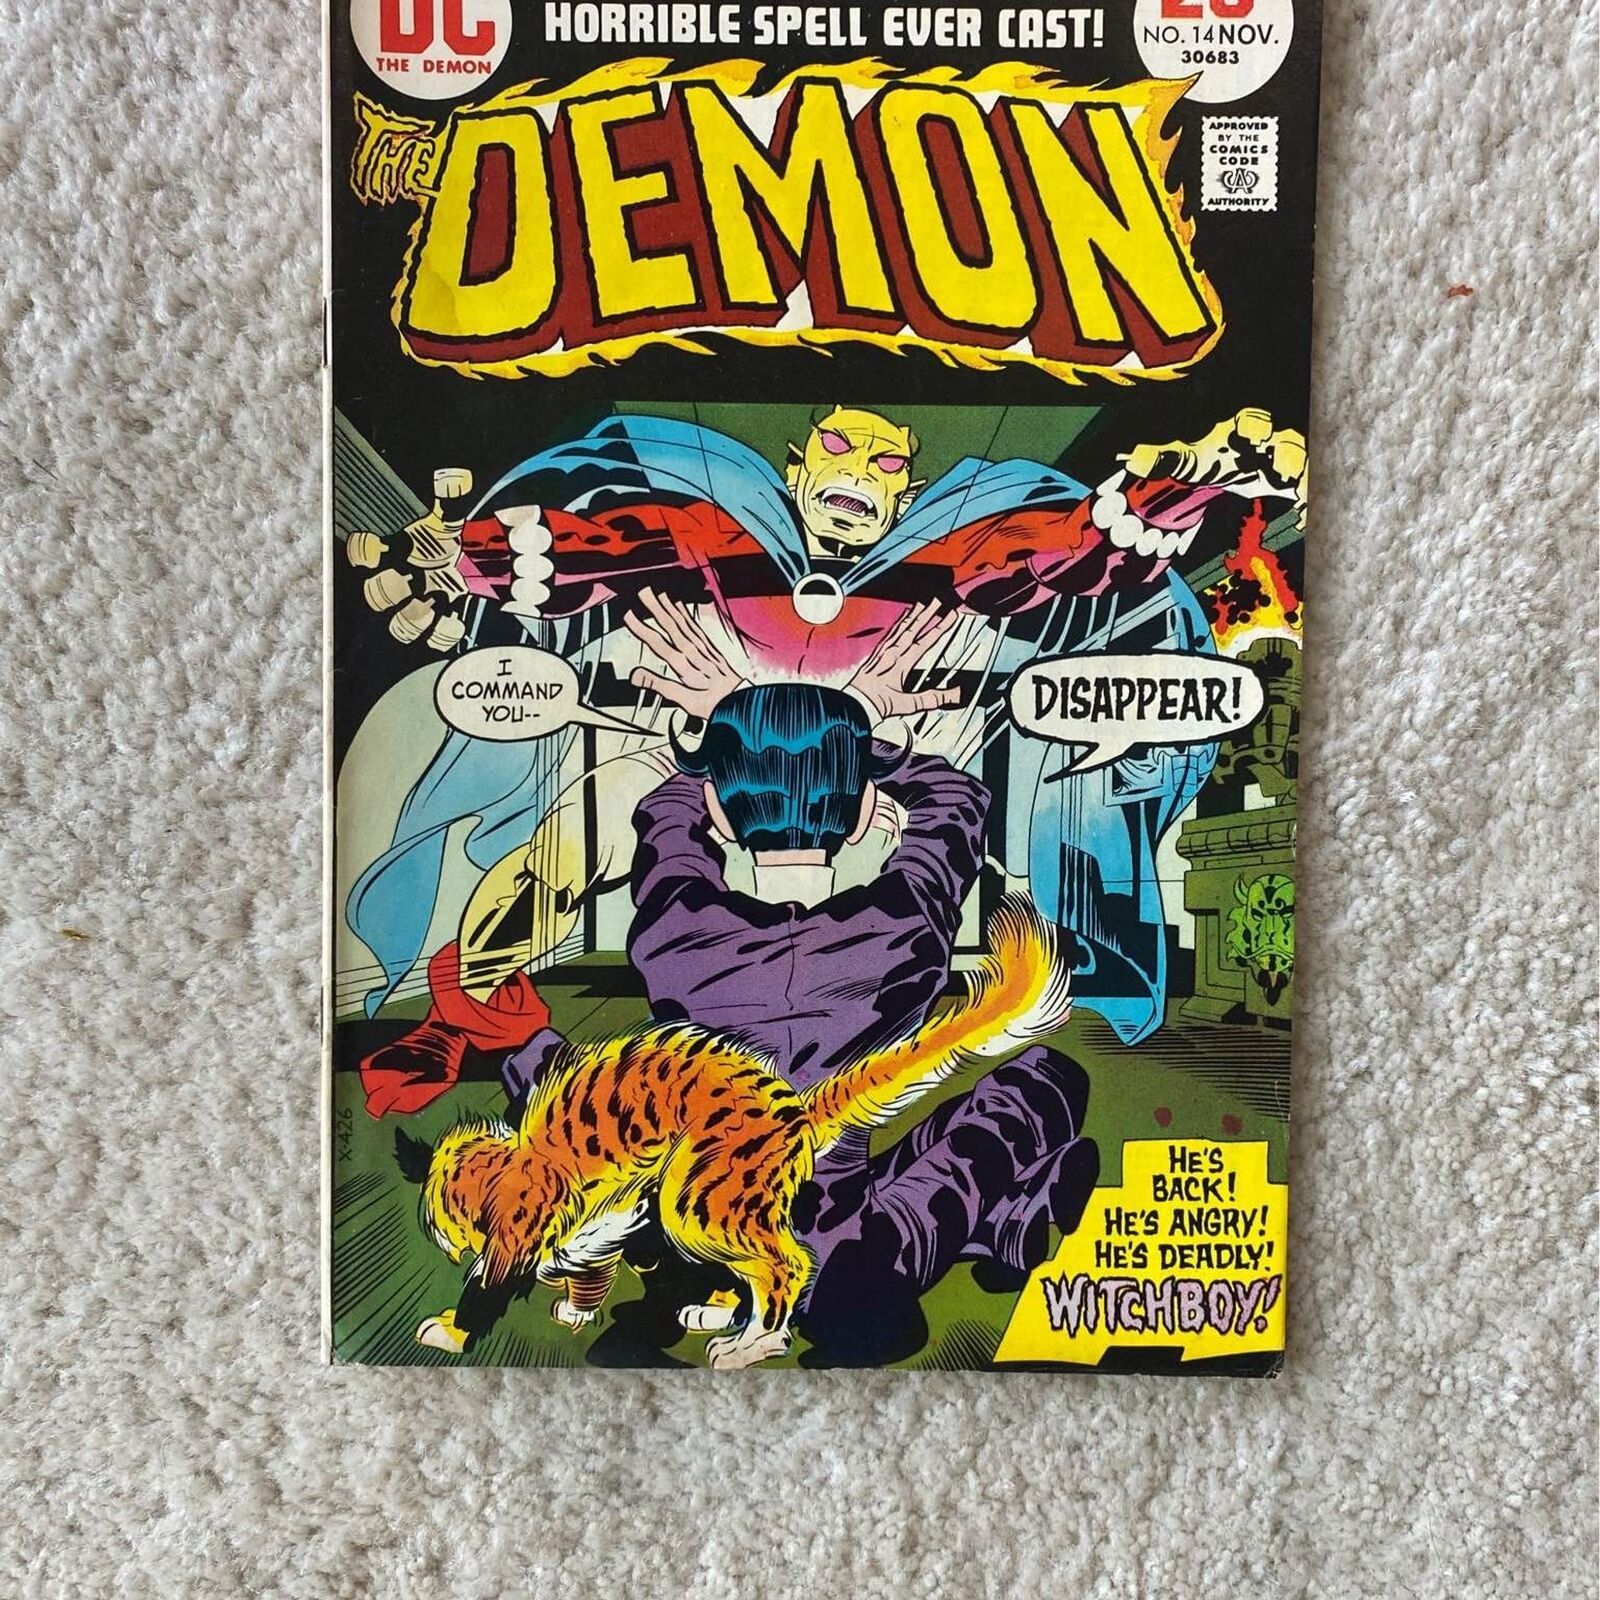 DC Comics Demon #14 (November 1973)